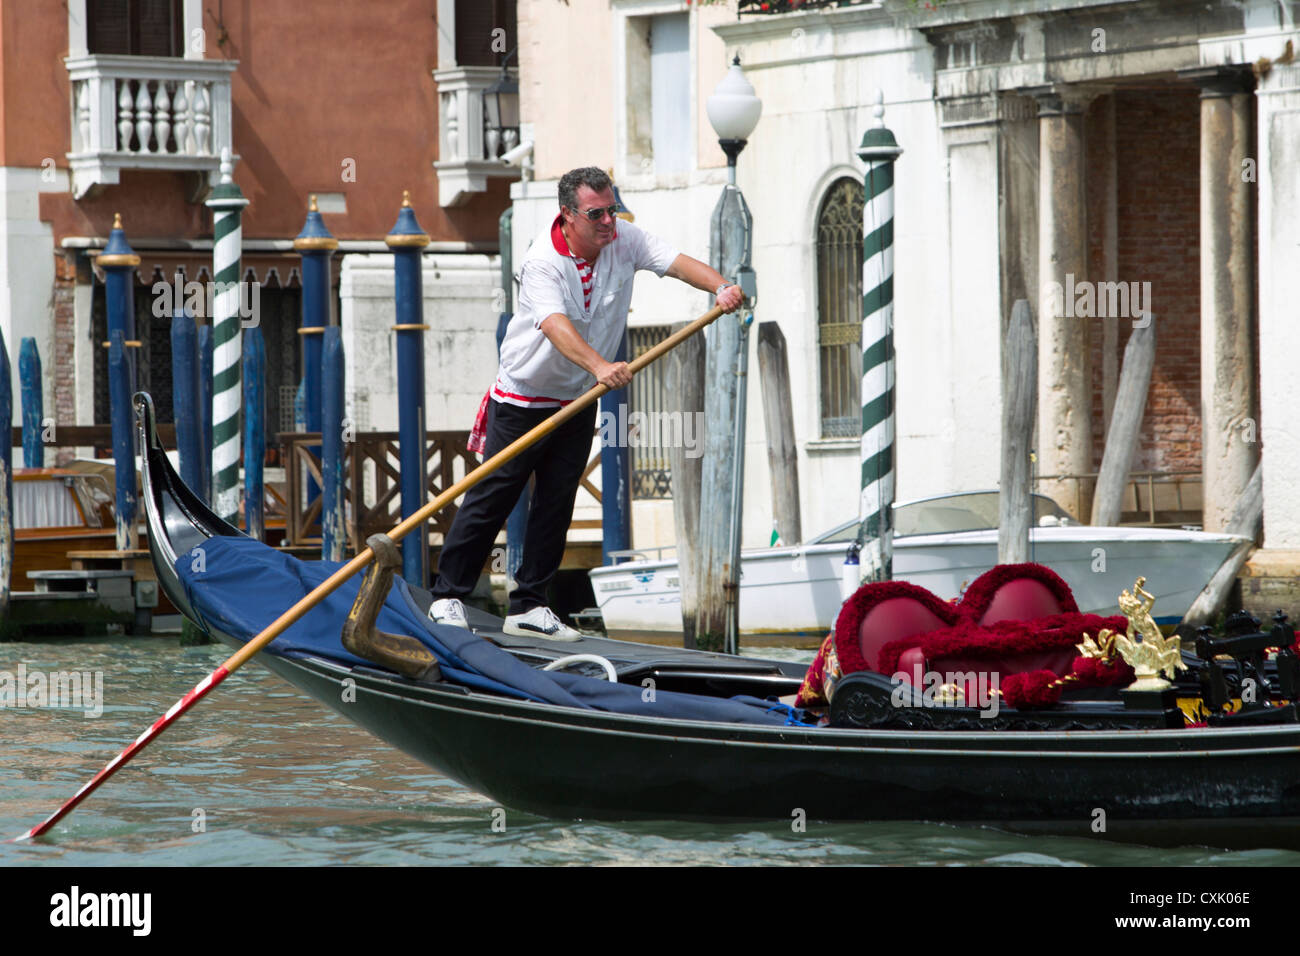 Gondoliere schiebenden einer Gondel in Venedig, Italien Stockfoto